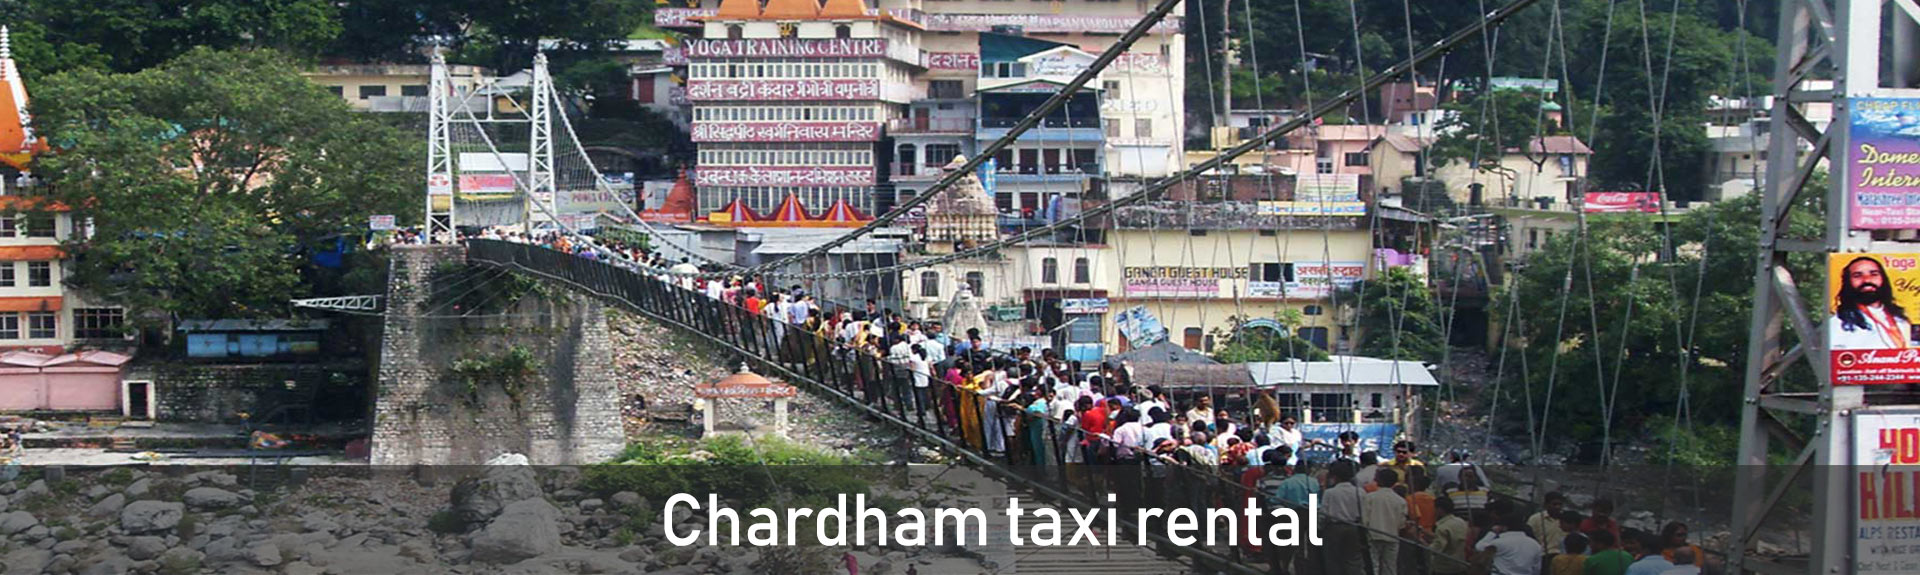 Chardham taxi rental